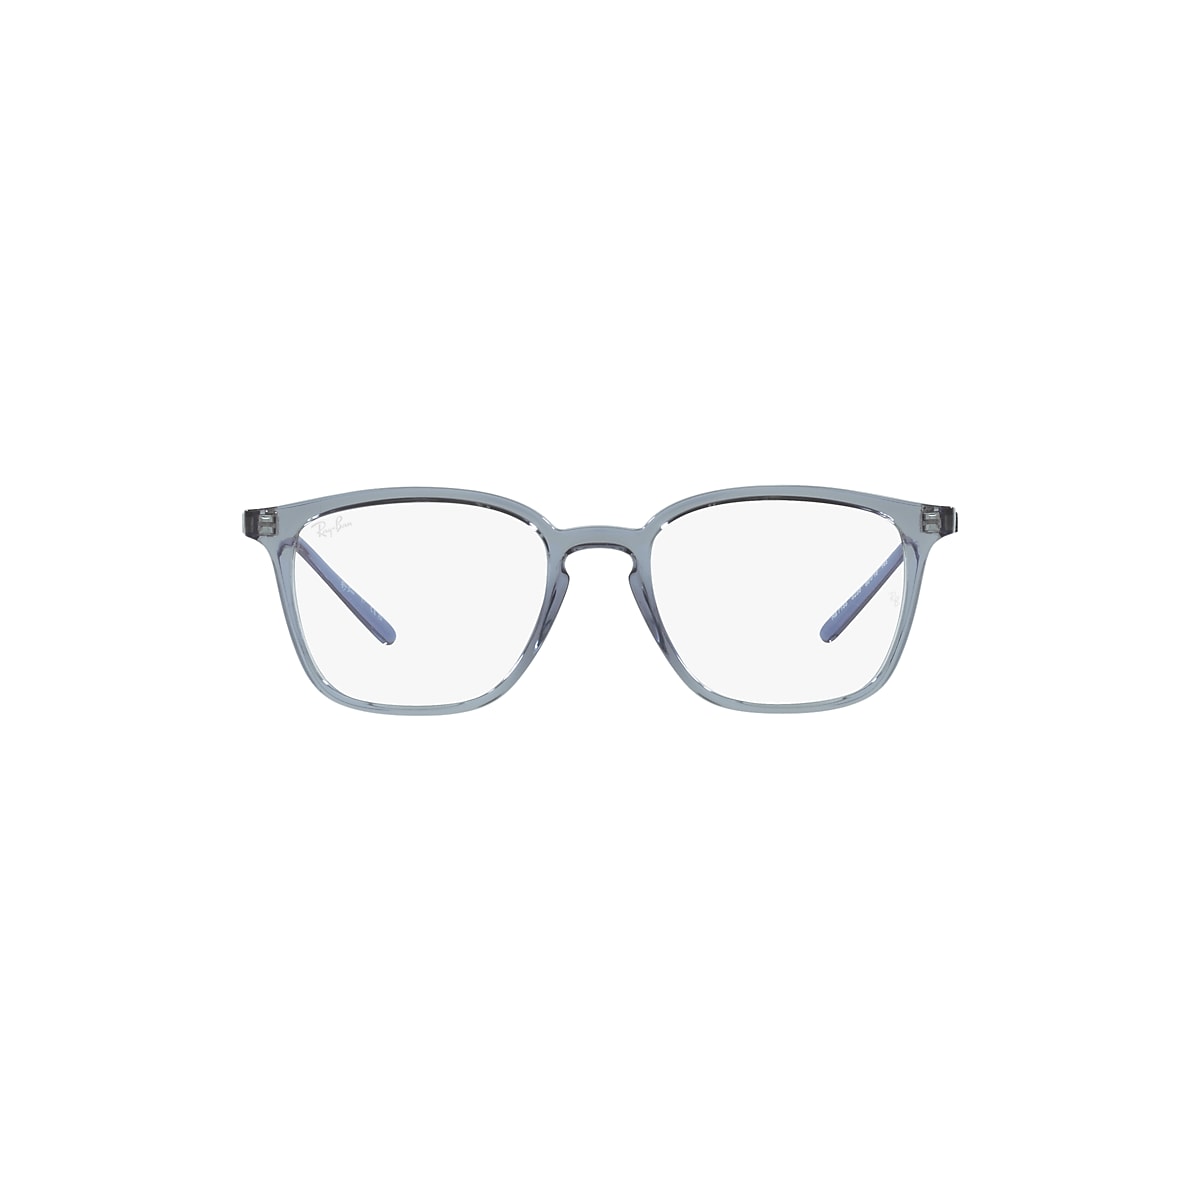 RB7185 OPTICS Eyeglasses with Transparent Dark Blue Frame 